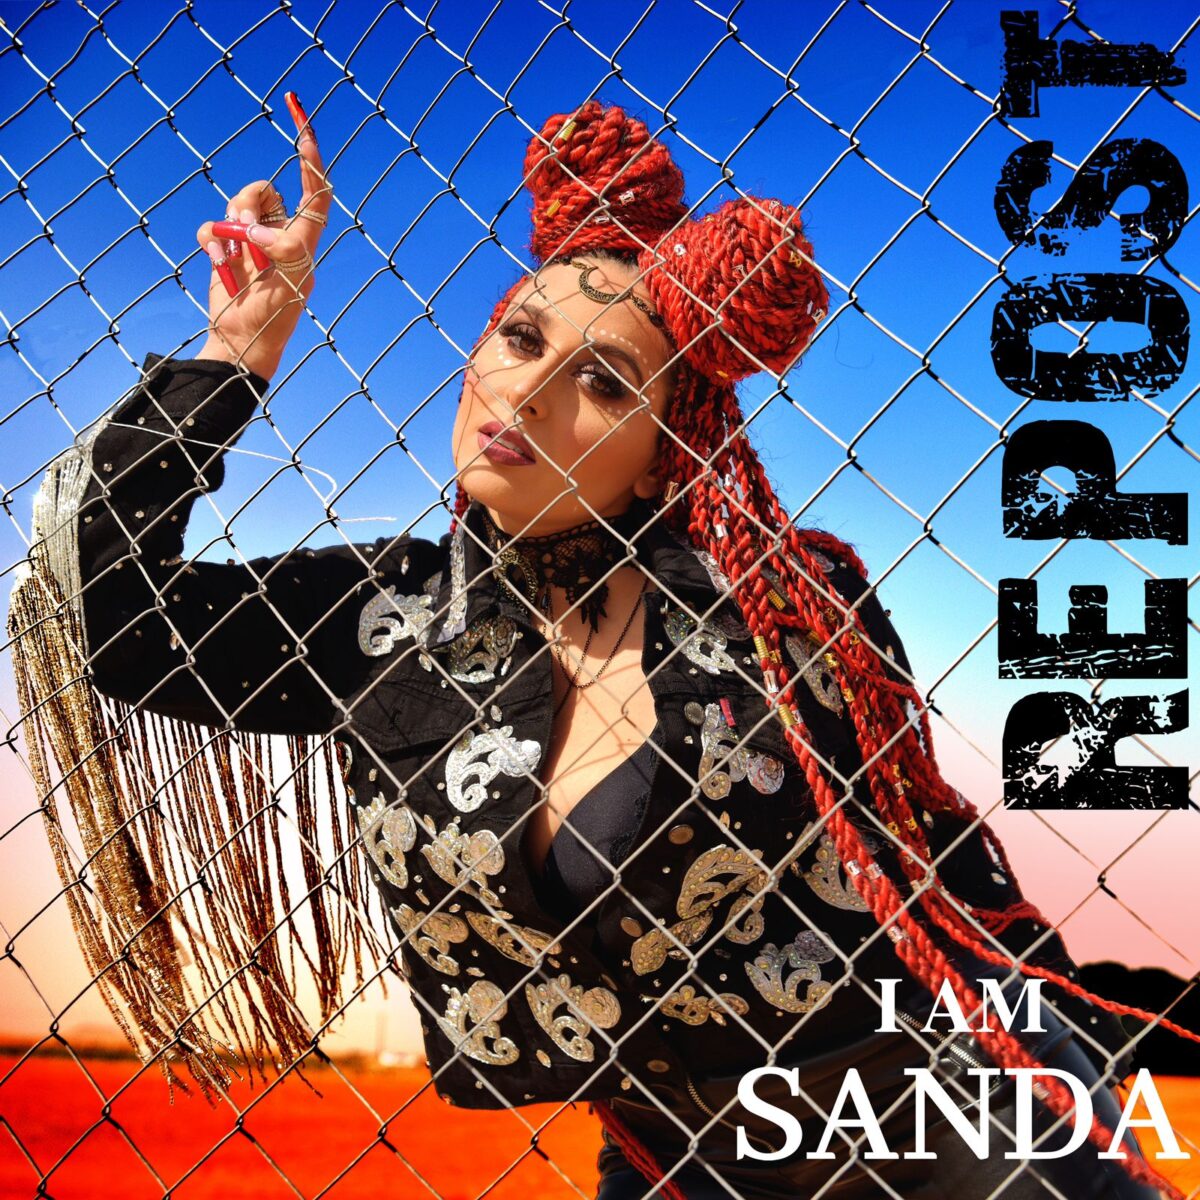 SANDA Releases Her New Album titled "REPOST"